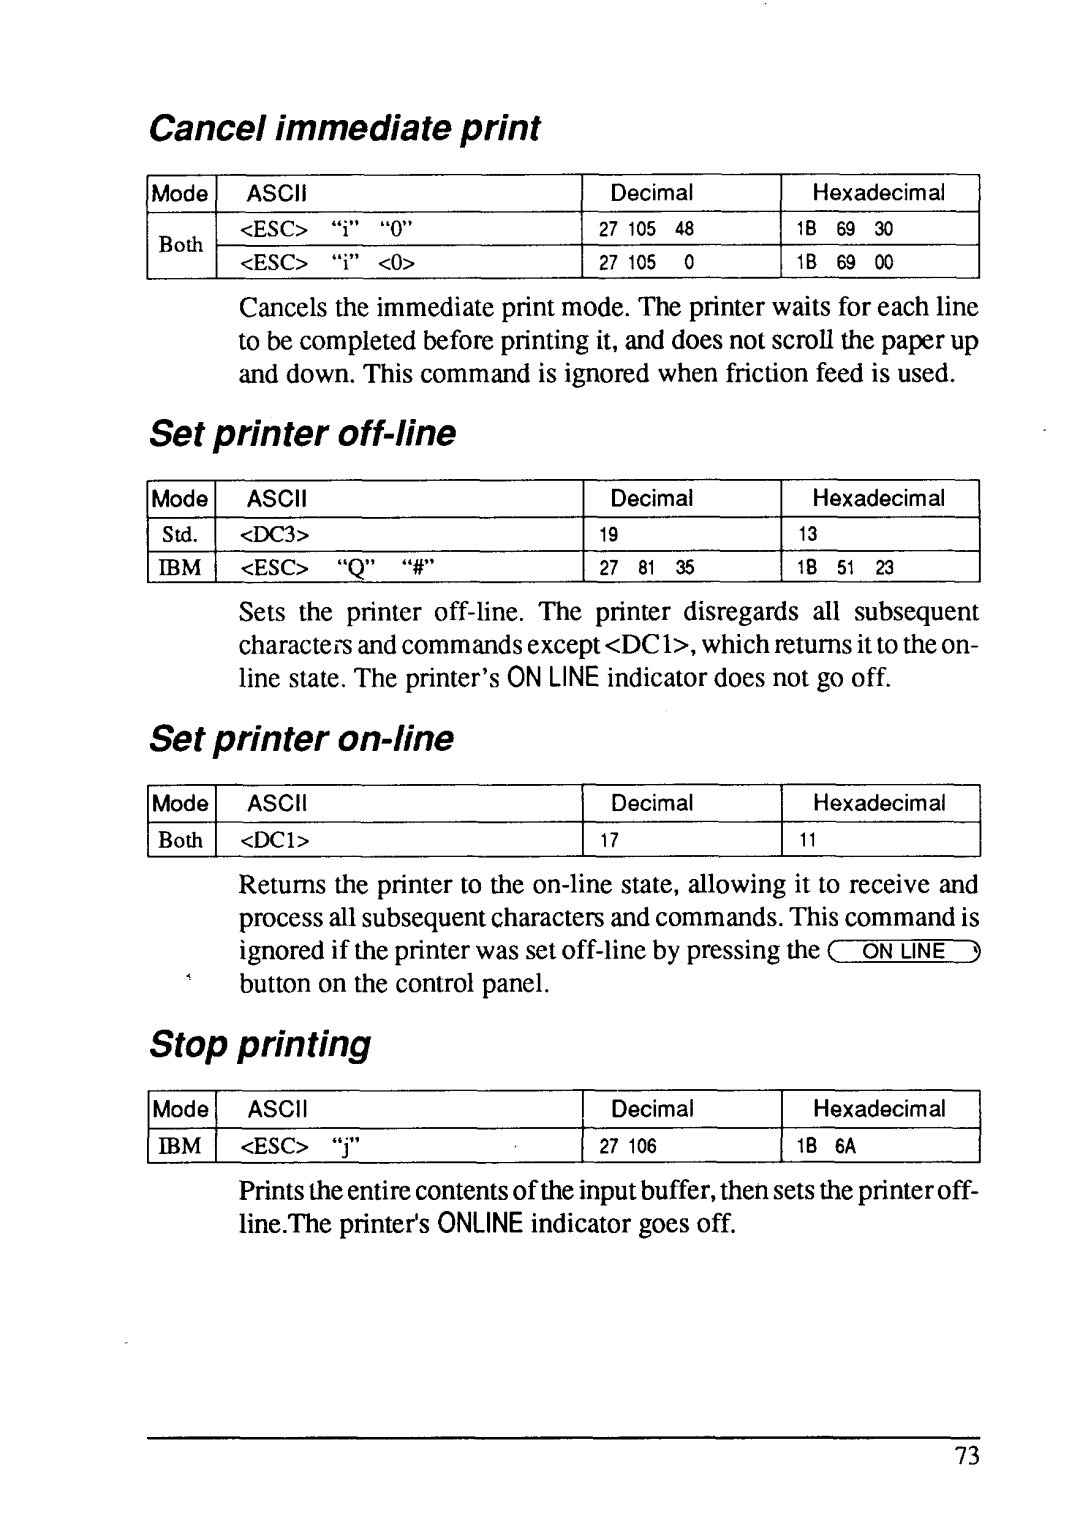 Star Micronics LC24-15 user manual Cancel immediate print, Set printer off-line, Set printer on-line, Stop printing 